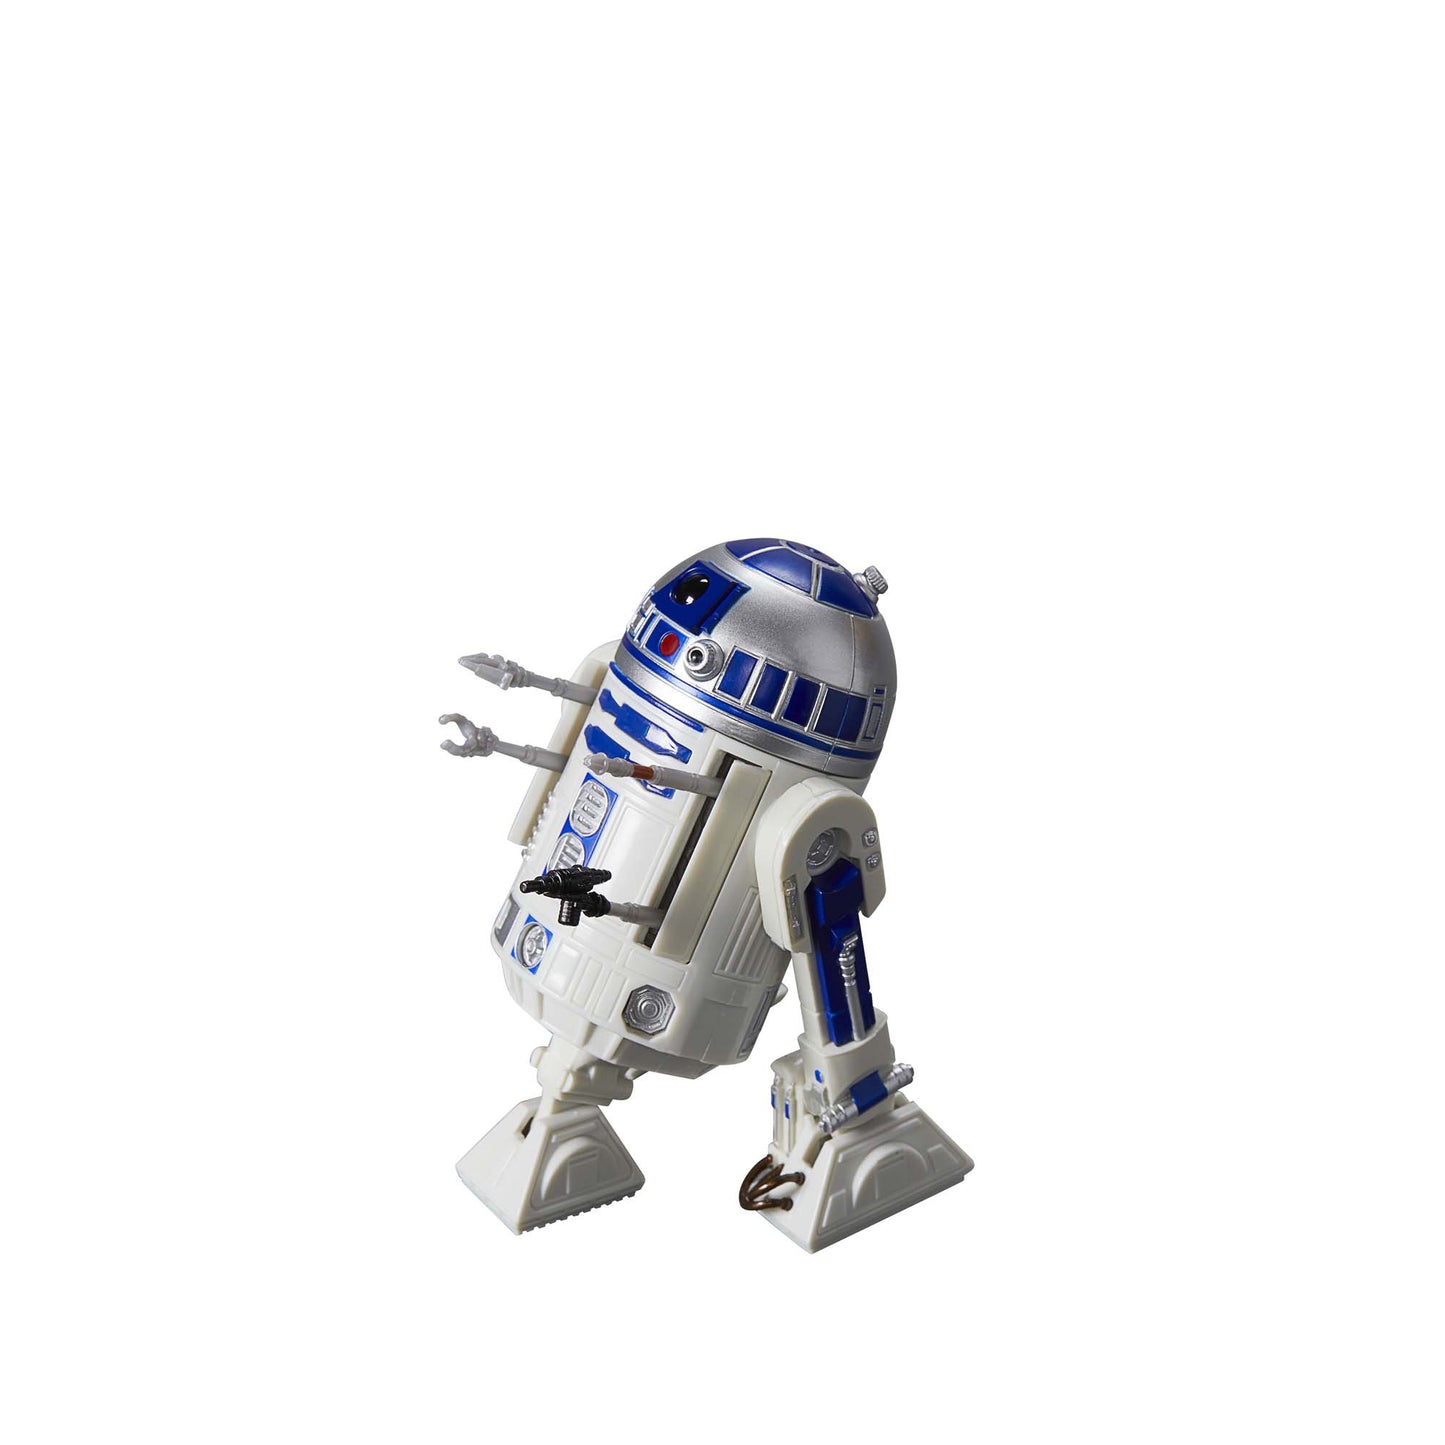 Star Wars The Black Series R2-D2 (Artoo-Detoo) Action Figure Toy